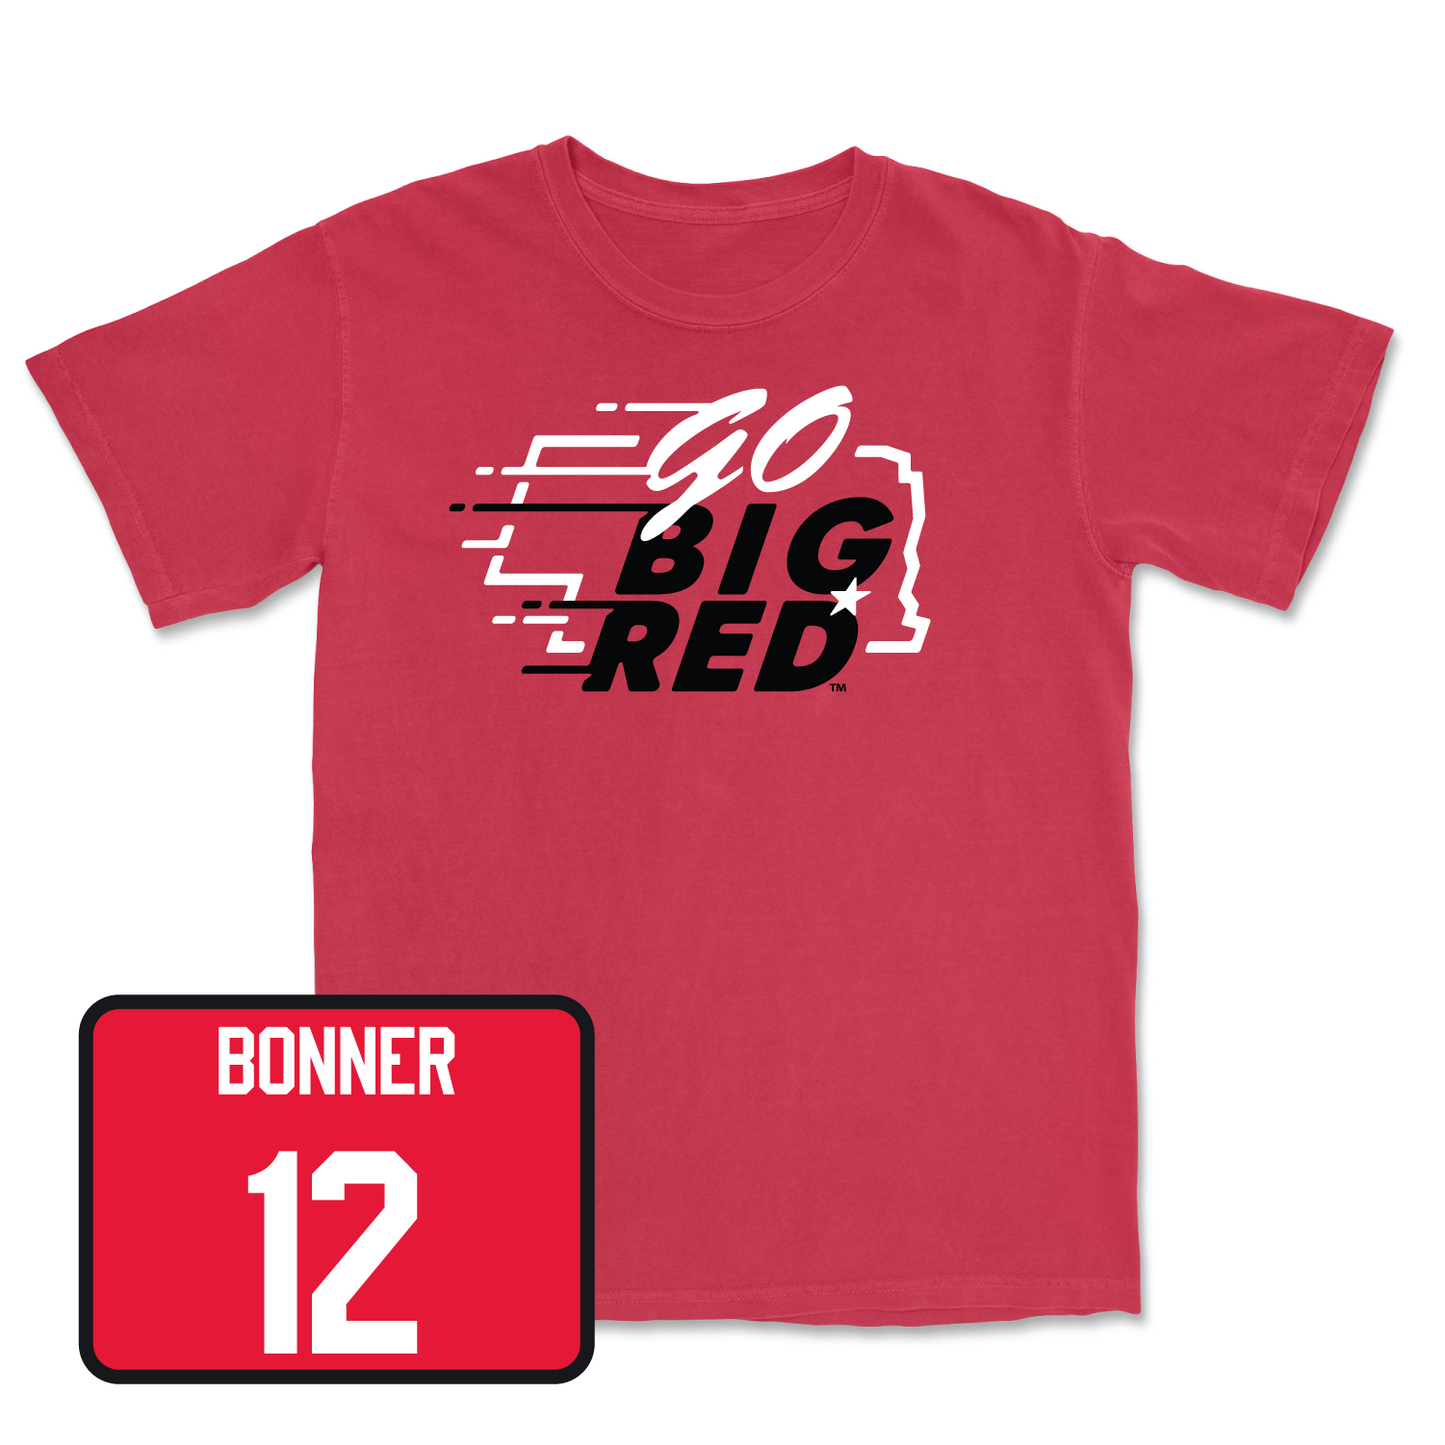 Red Football GBR Tee 2 Medium / Janiran Bonner | #12